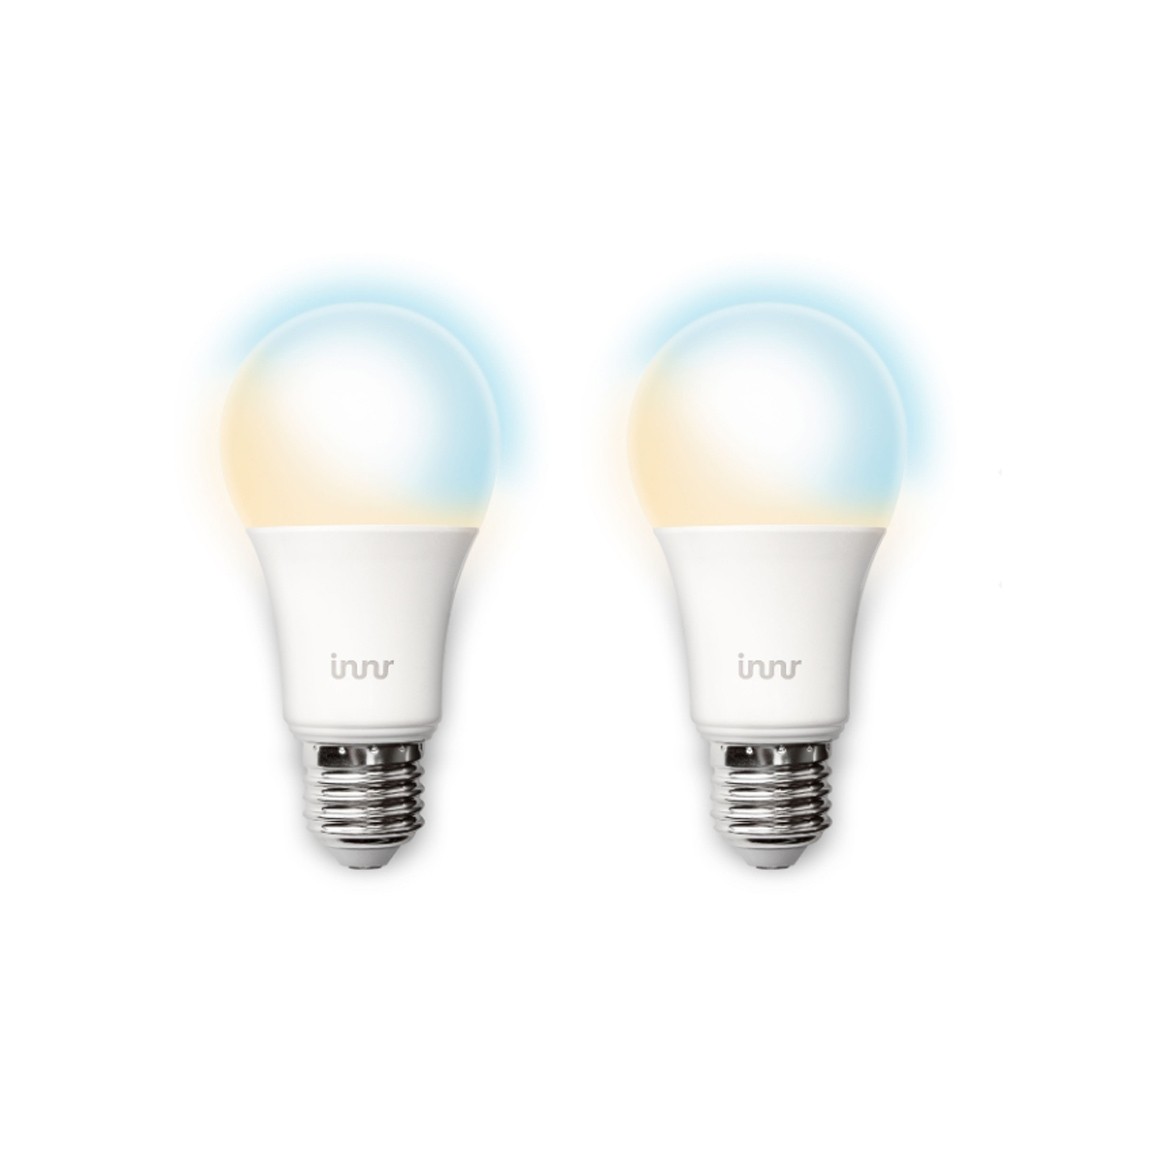 Innr LED E27 Lampe - dimmbar Weiß / Zigbee 3.0 RB 278 T-2 Doppelpack